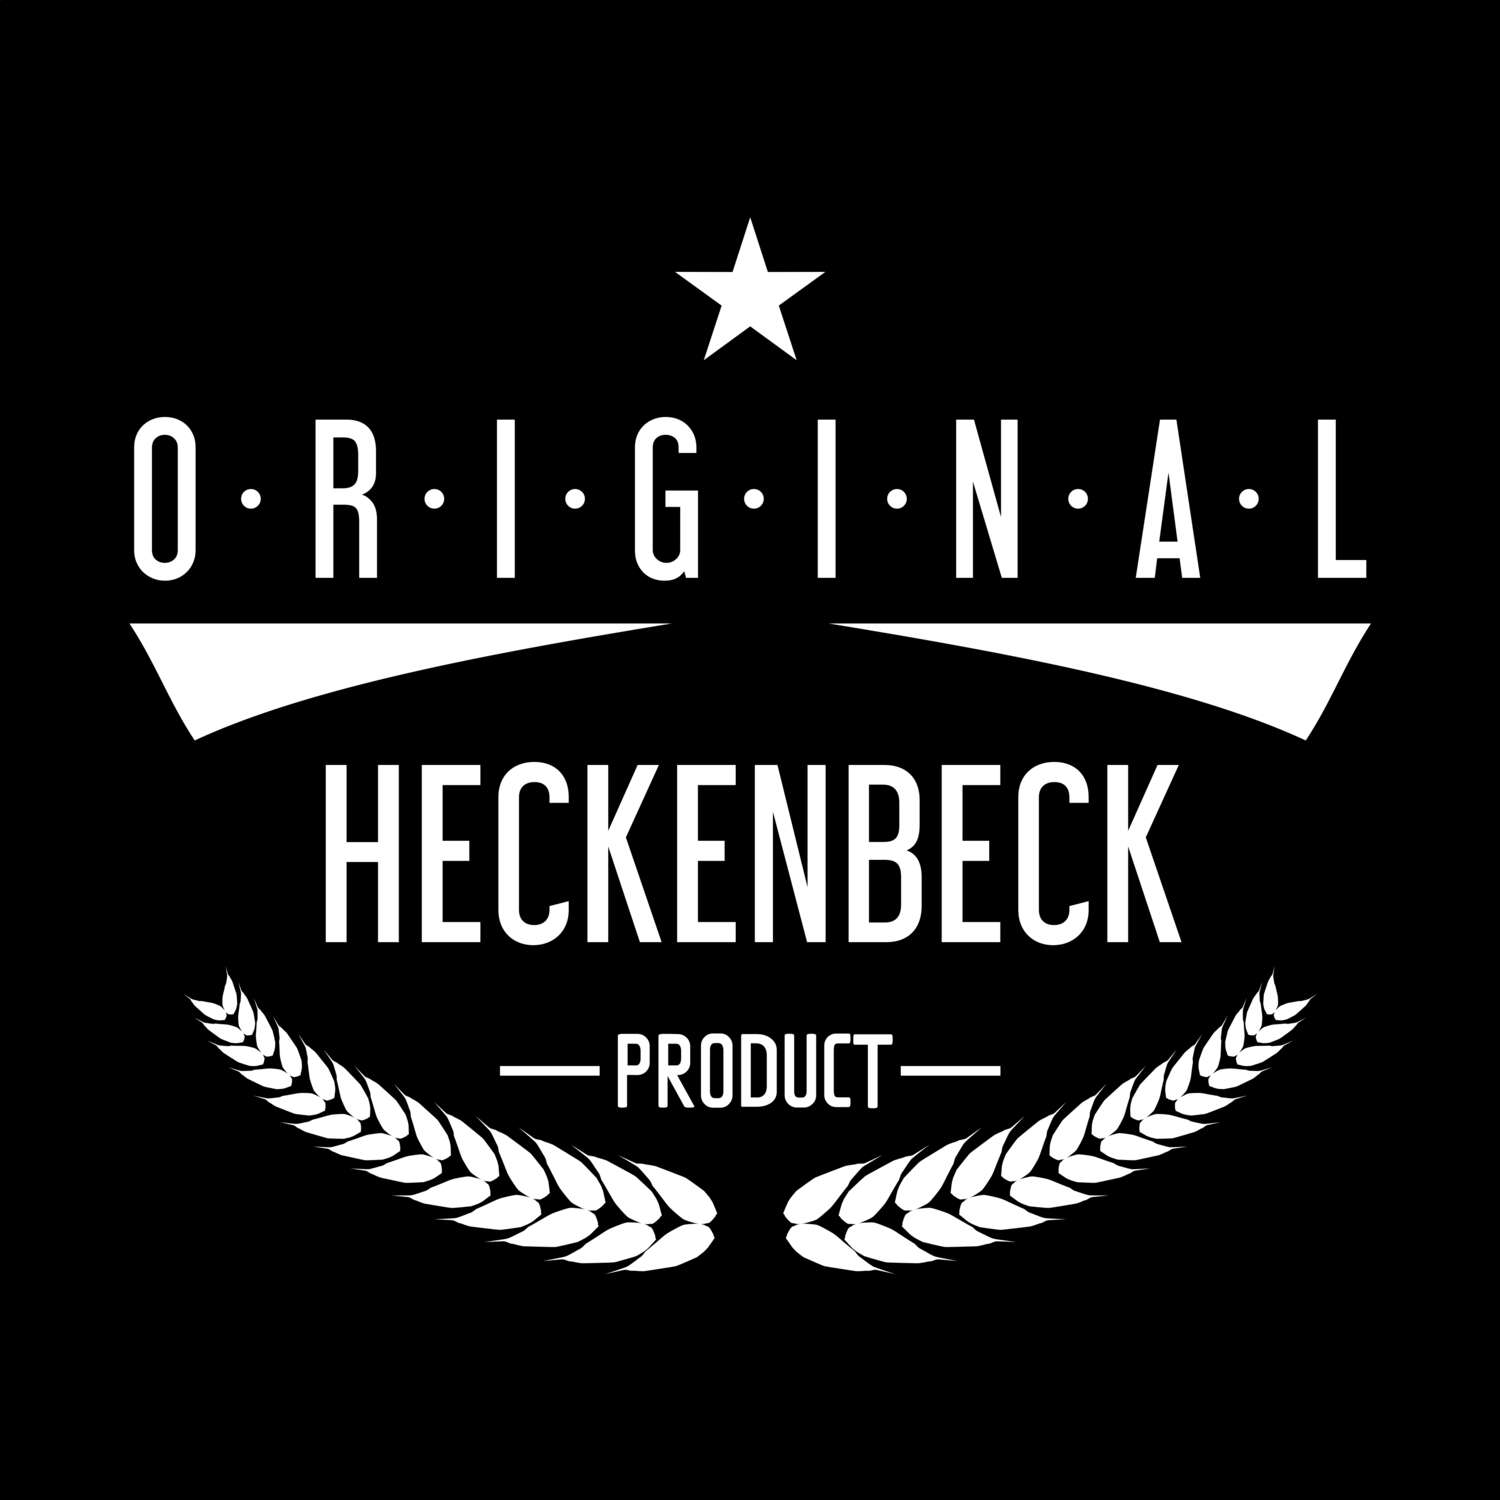 Heckenbeck T-Shirt »Original Product«